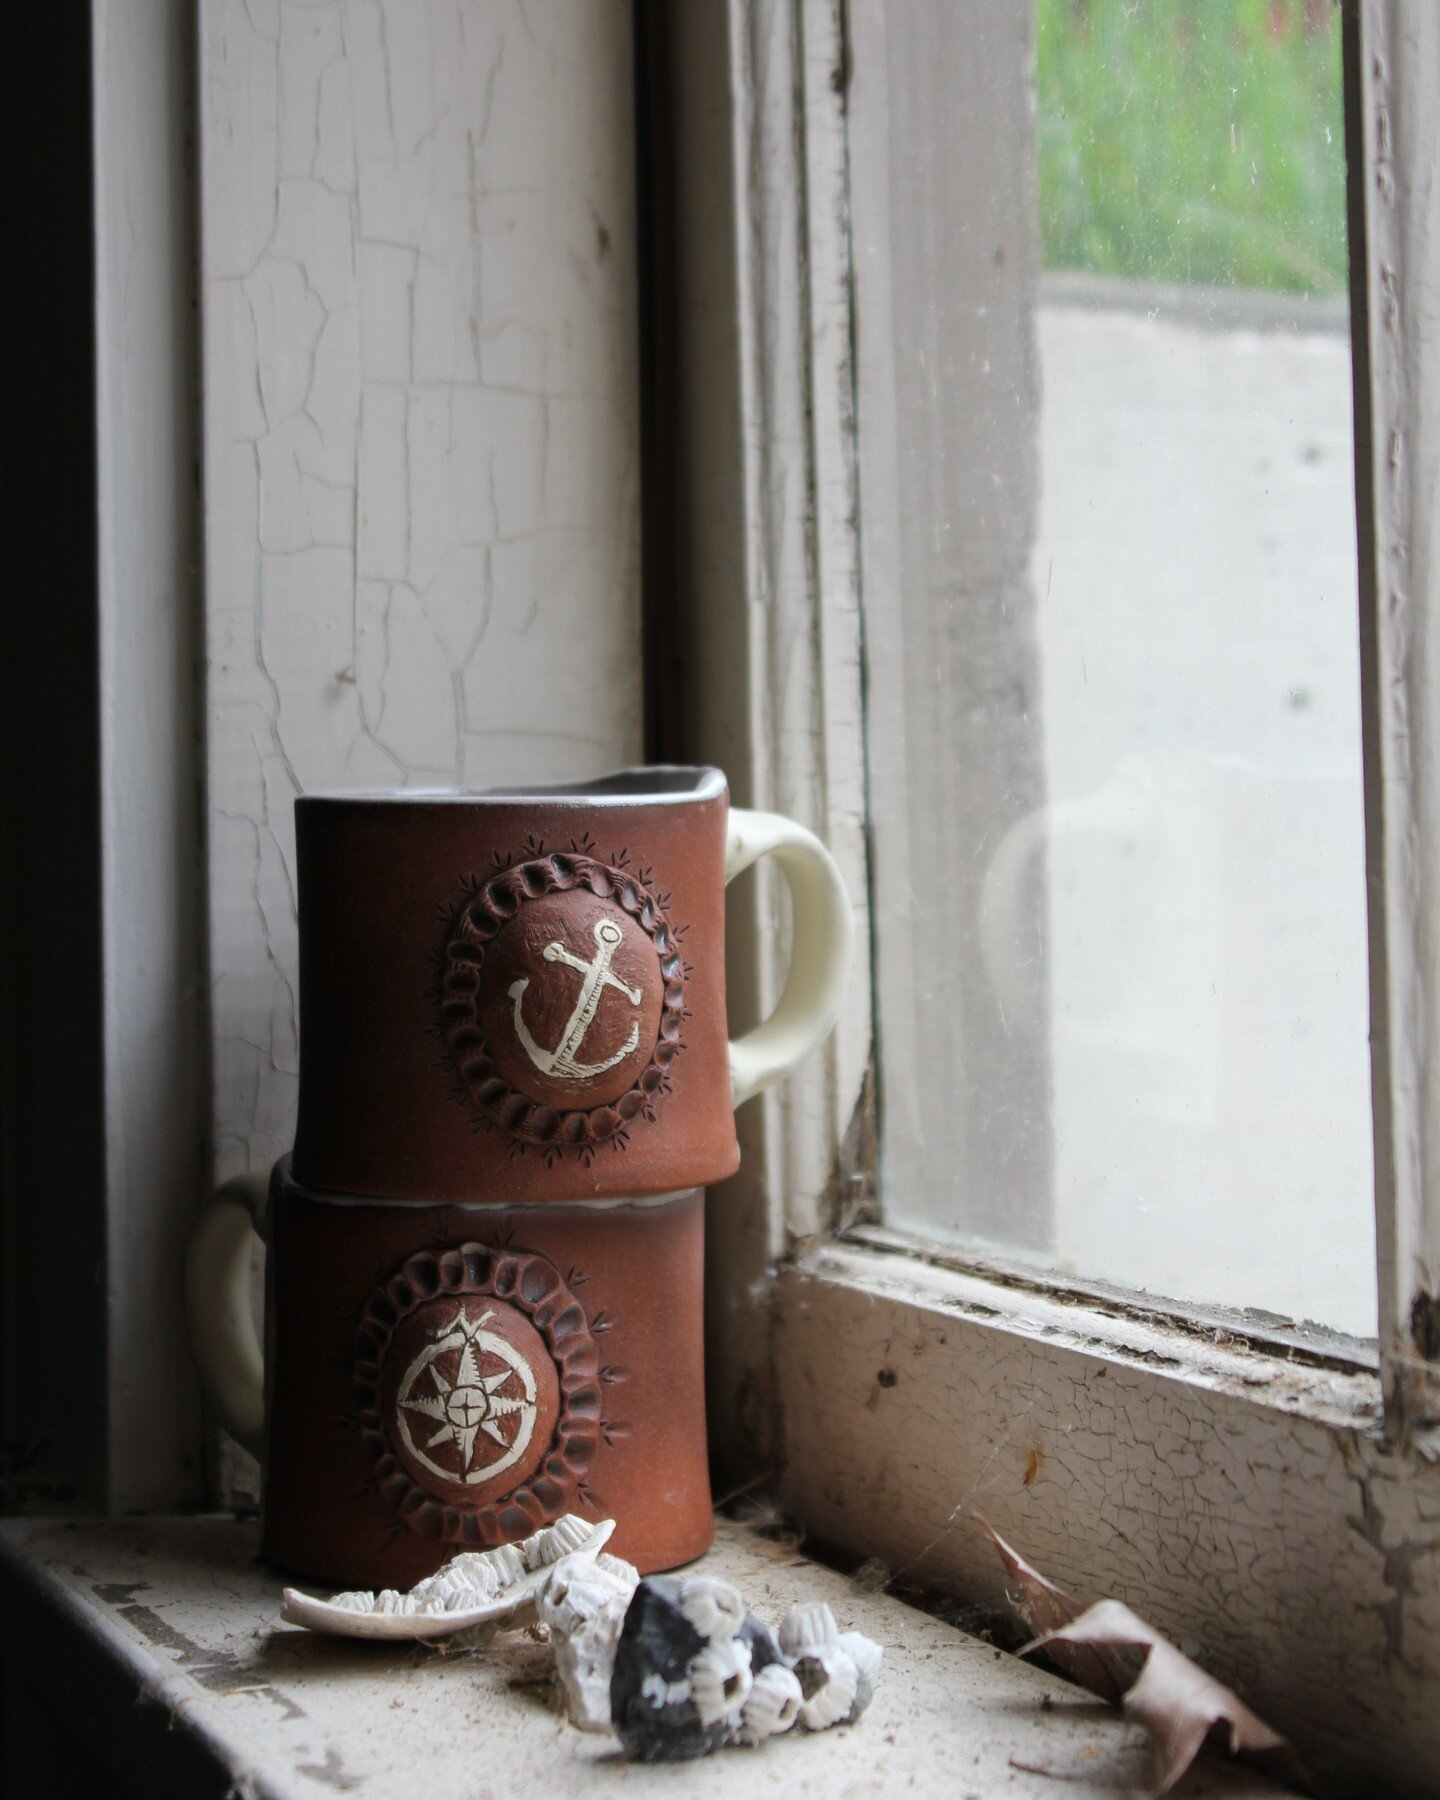 Set your bearing and anchors awheigh!
.
.
.
#drydockgoods #drydockpottery #handbuiltceramics #handbuiltpottery #handbuilt #handmademug #mugsmugsmugs #mugsofinstagram #redclaylove #redclay #pnwpottery #pnwpotter #potterystudio #ceramicart #ceramicsofi